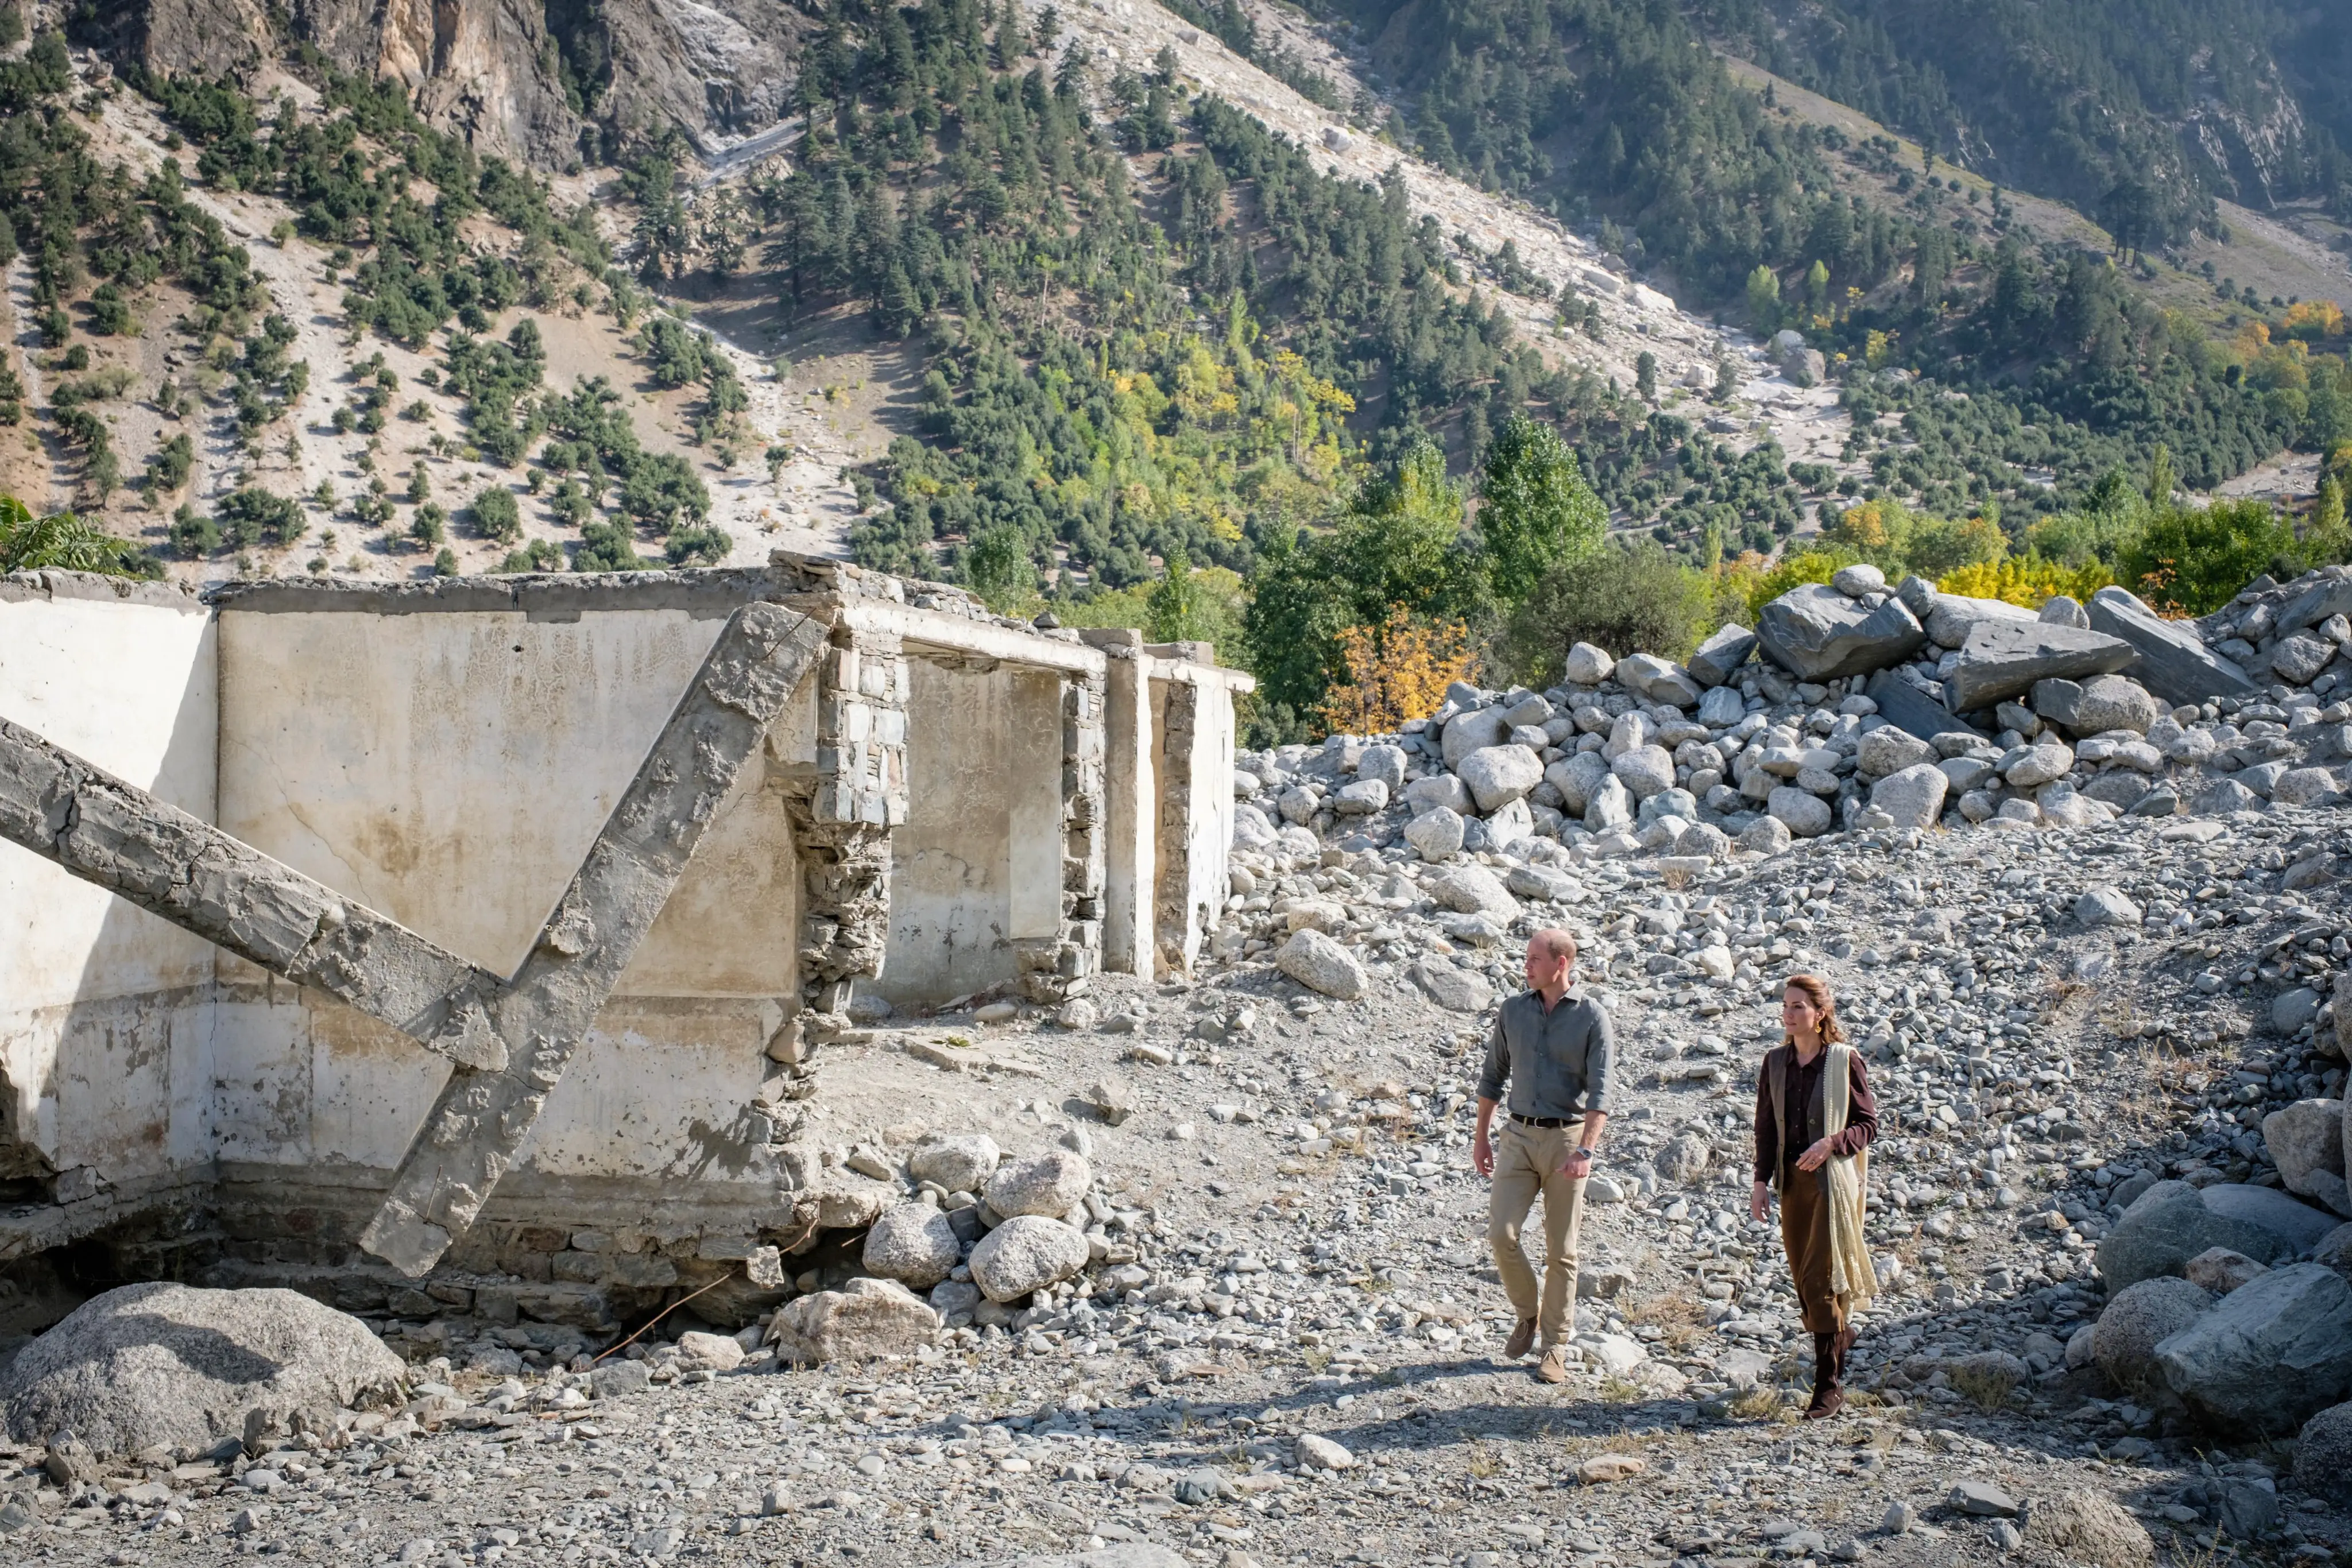 Duke and Duchess of Cambridge visited Hindu Kush region in Chitral during Pakistan visit1